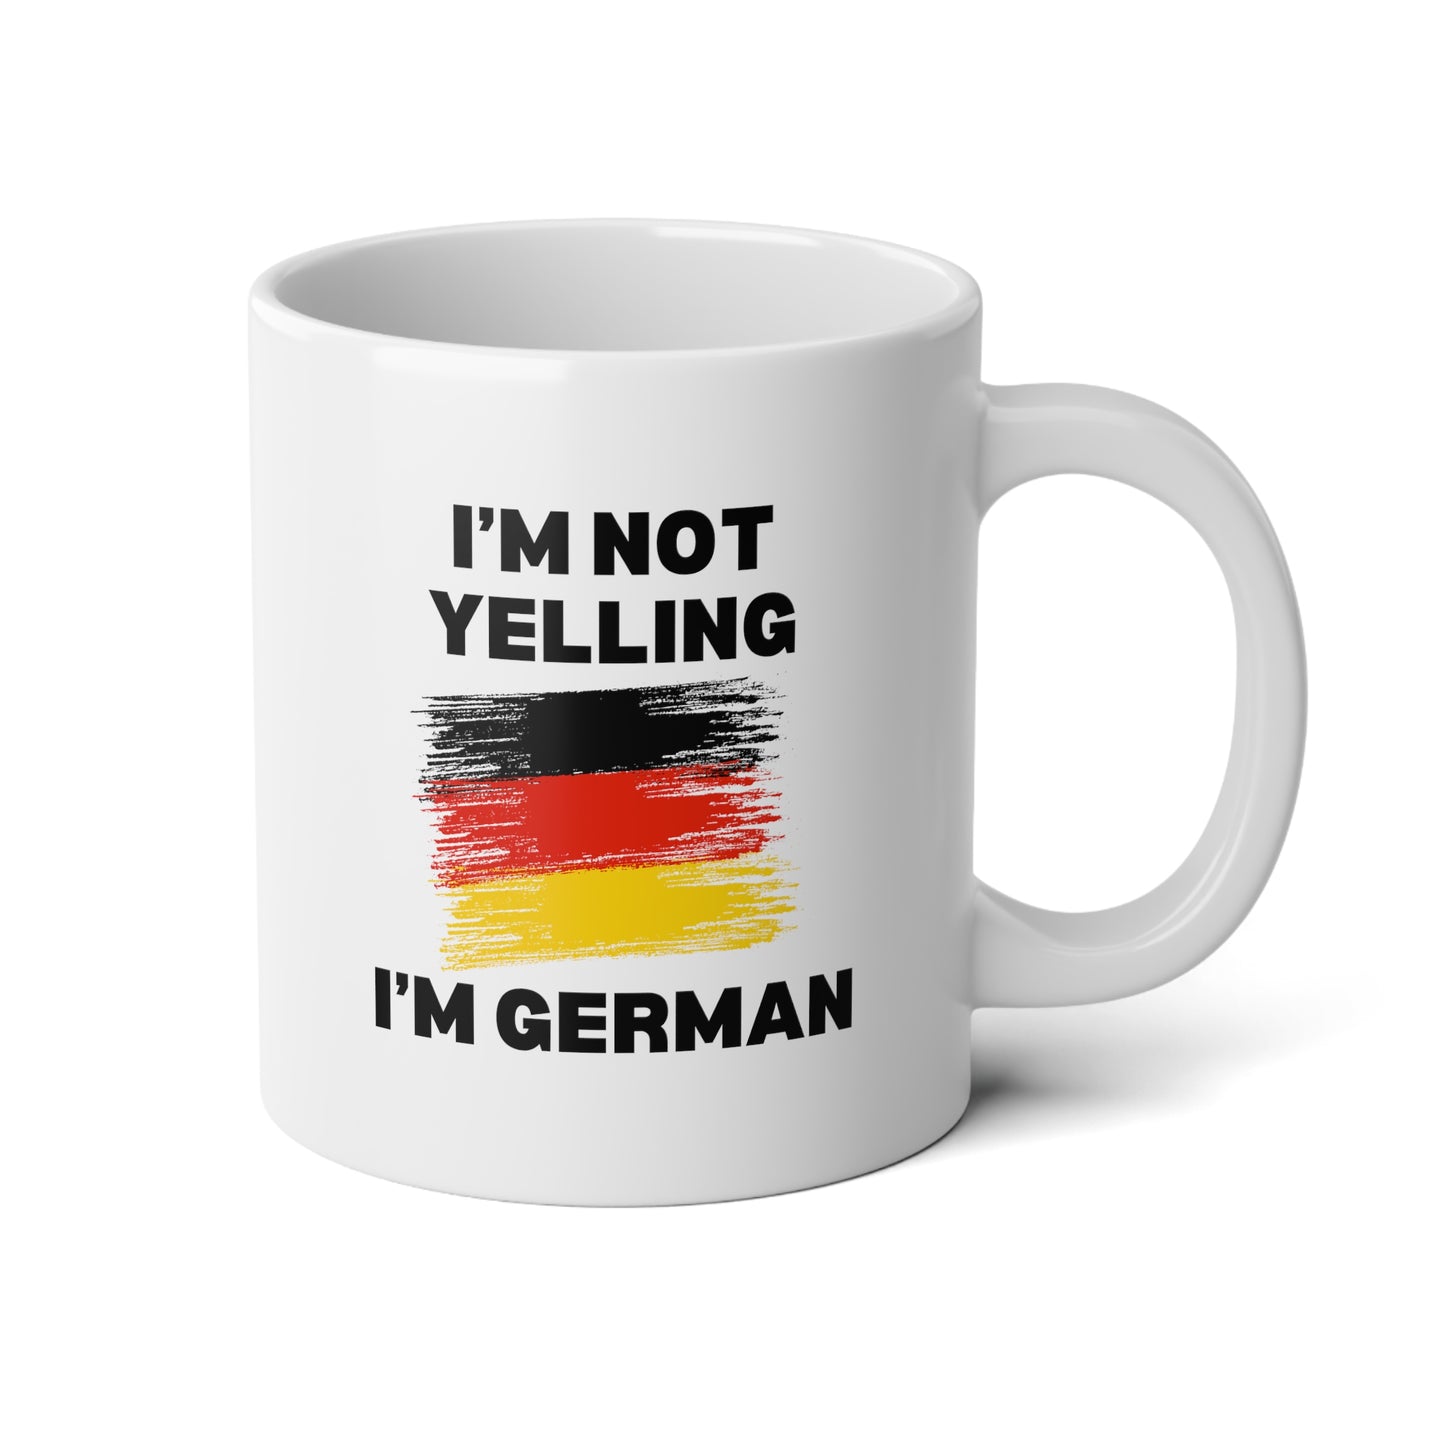 I'm Not Yelling I'm German 20oz white funny large coffee mug gift for deutsch friend flag germany deutschland birthday waveywares wavey wares wavywares wavy wares